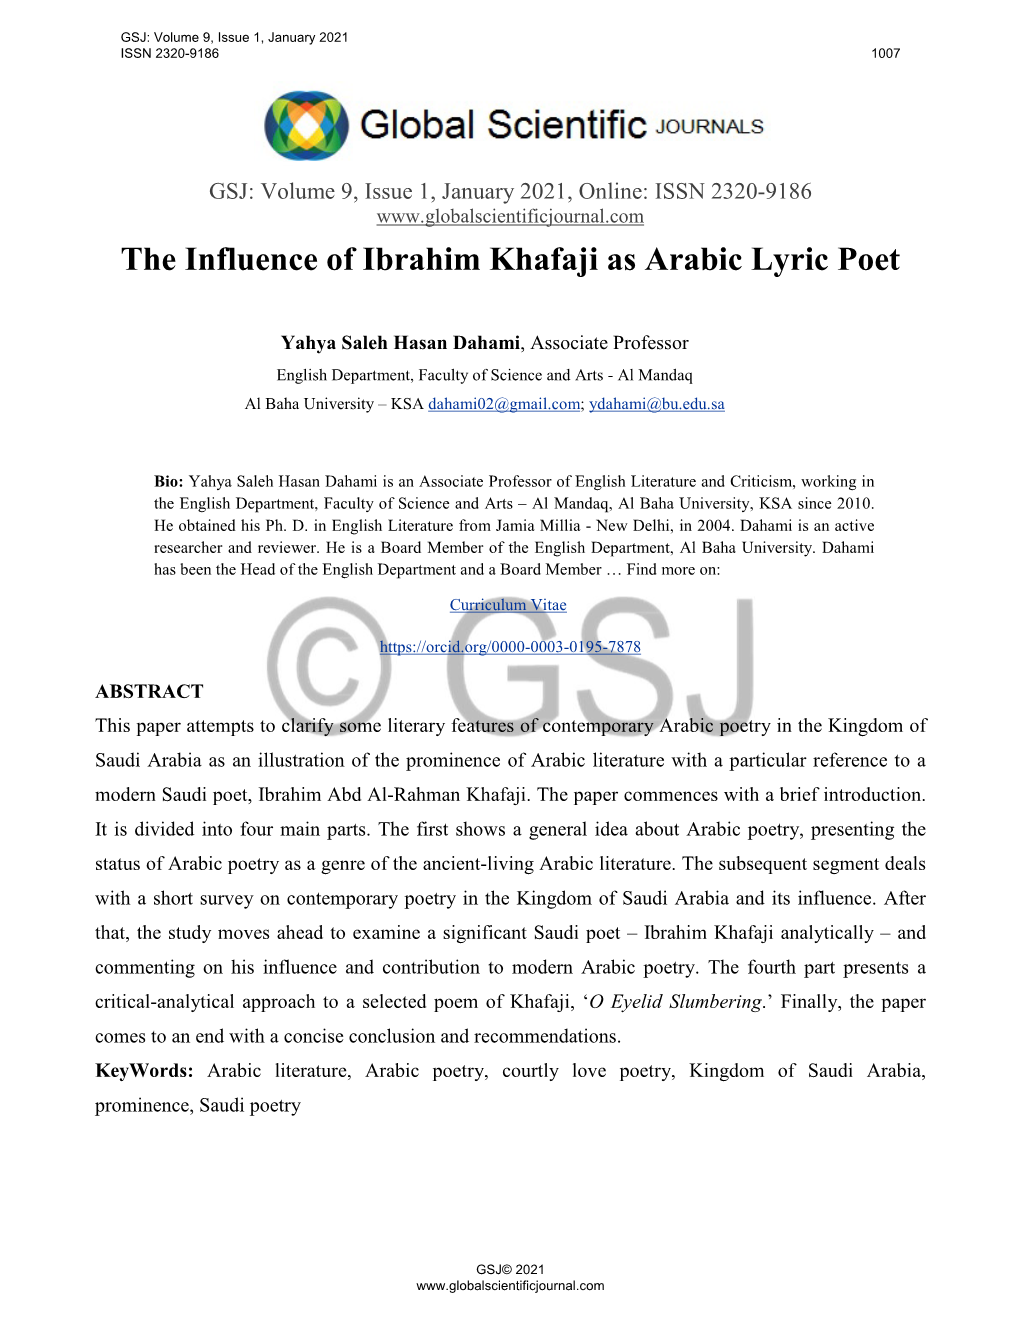 The Influence of Ibrahim Khafaji As Arabic Lyric Poet